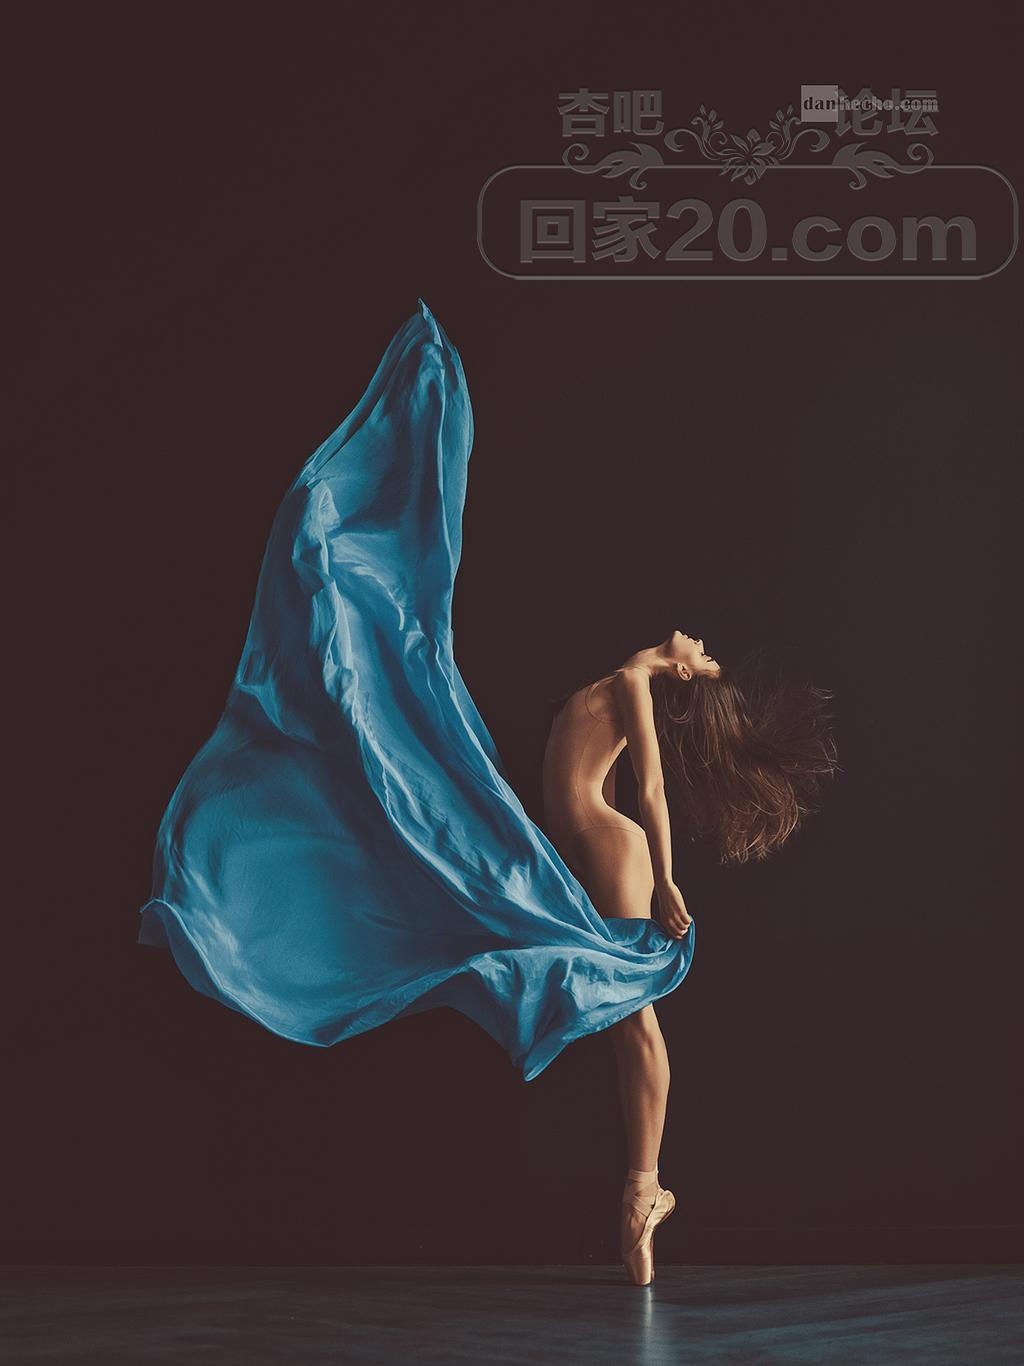 ballet_as_art by DanHecho on DeviantArt.jpg